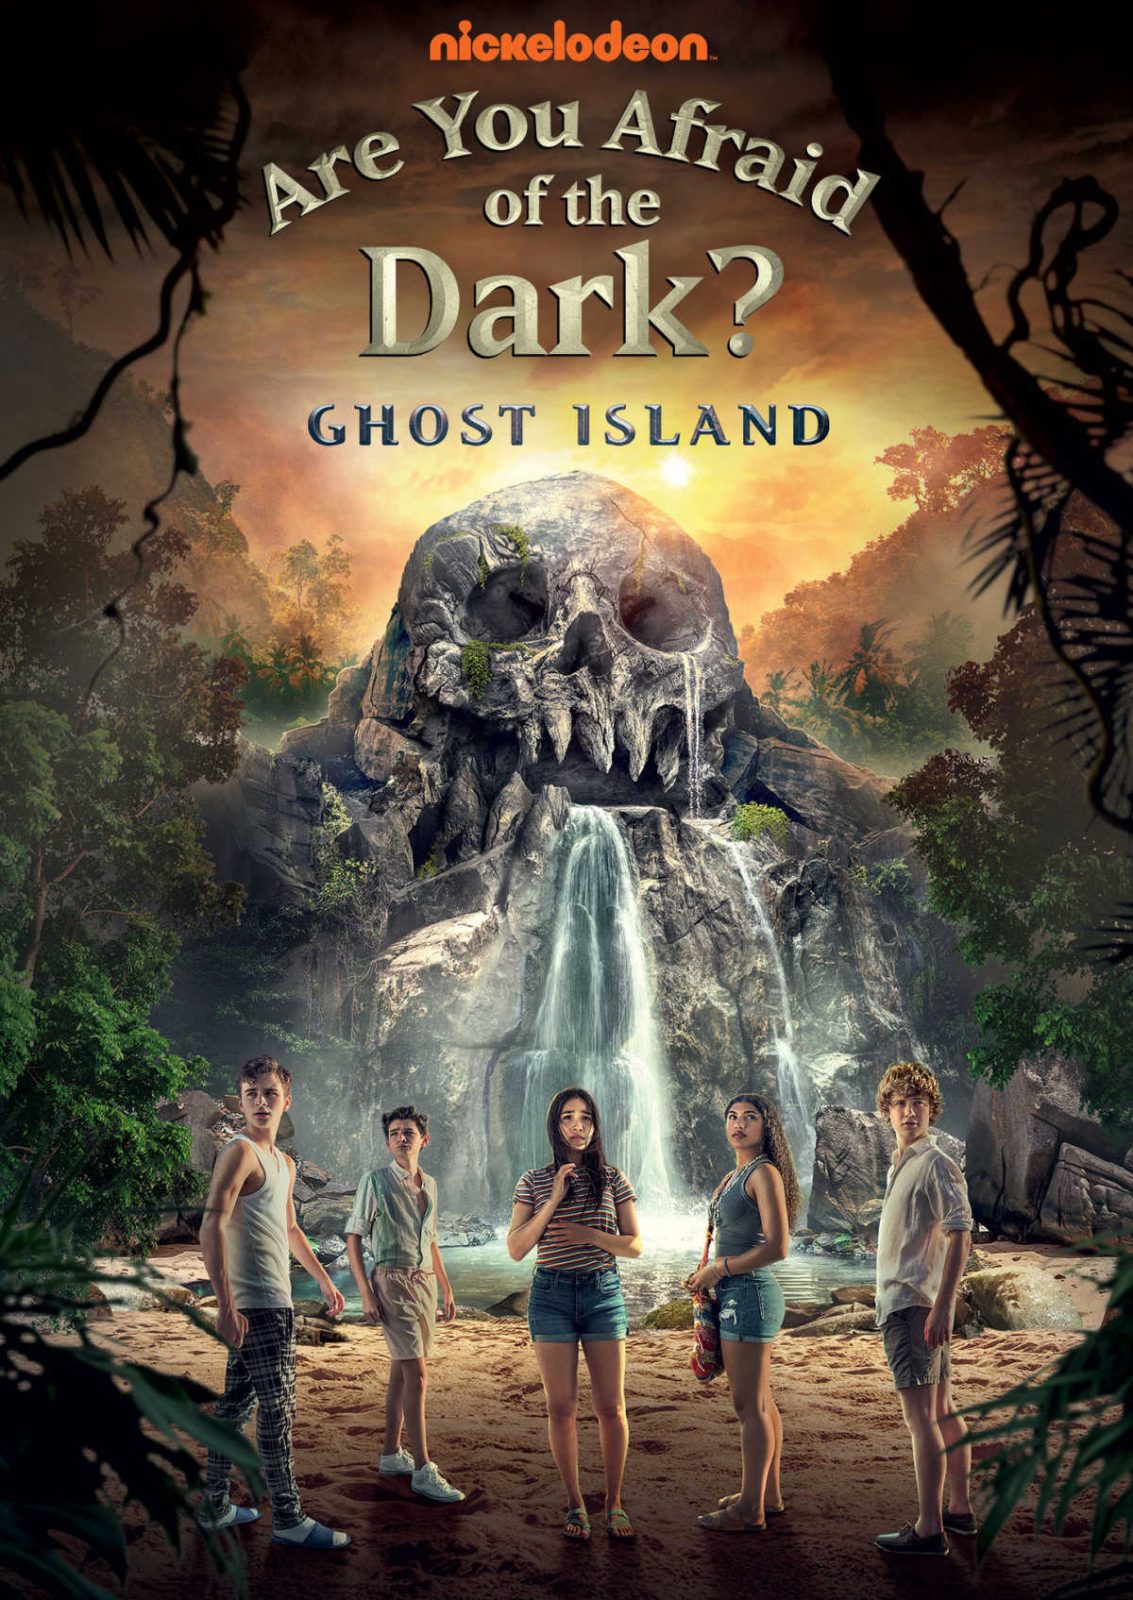 nickelodeon are you afraid of the dark ghost island